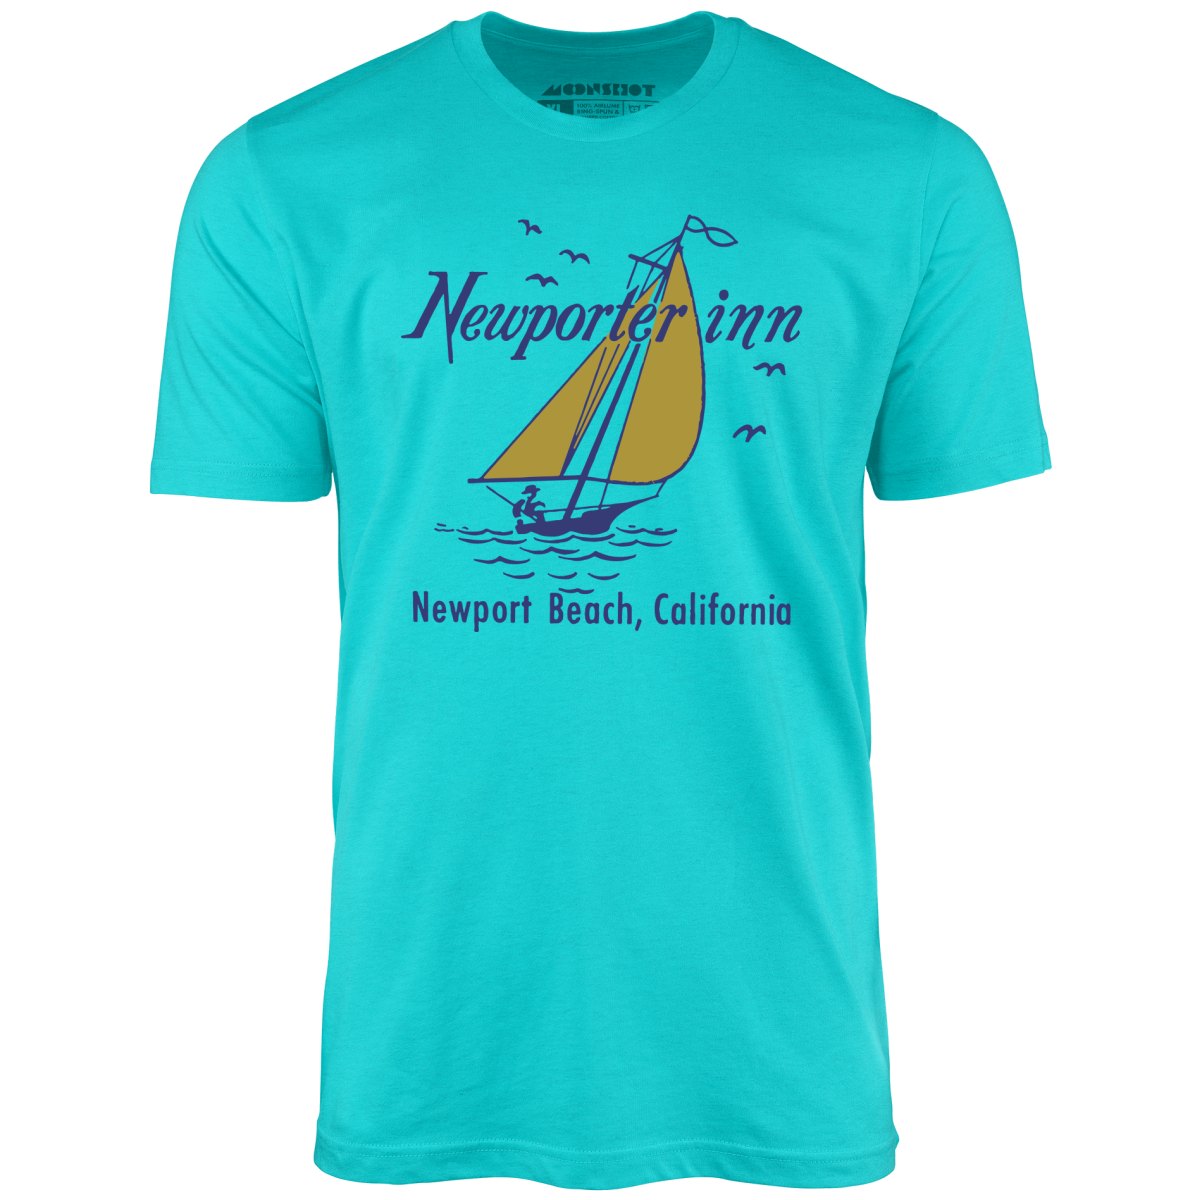 The Newporter Inn v2 - Newport Beach, CA - Vintage Hotel - Unisex T-Shirt